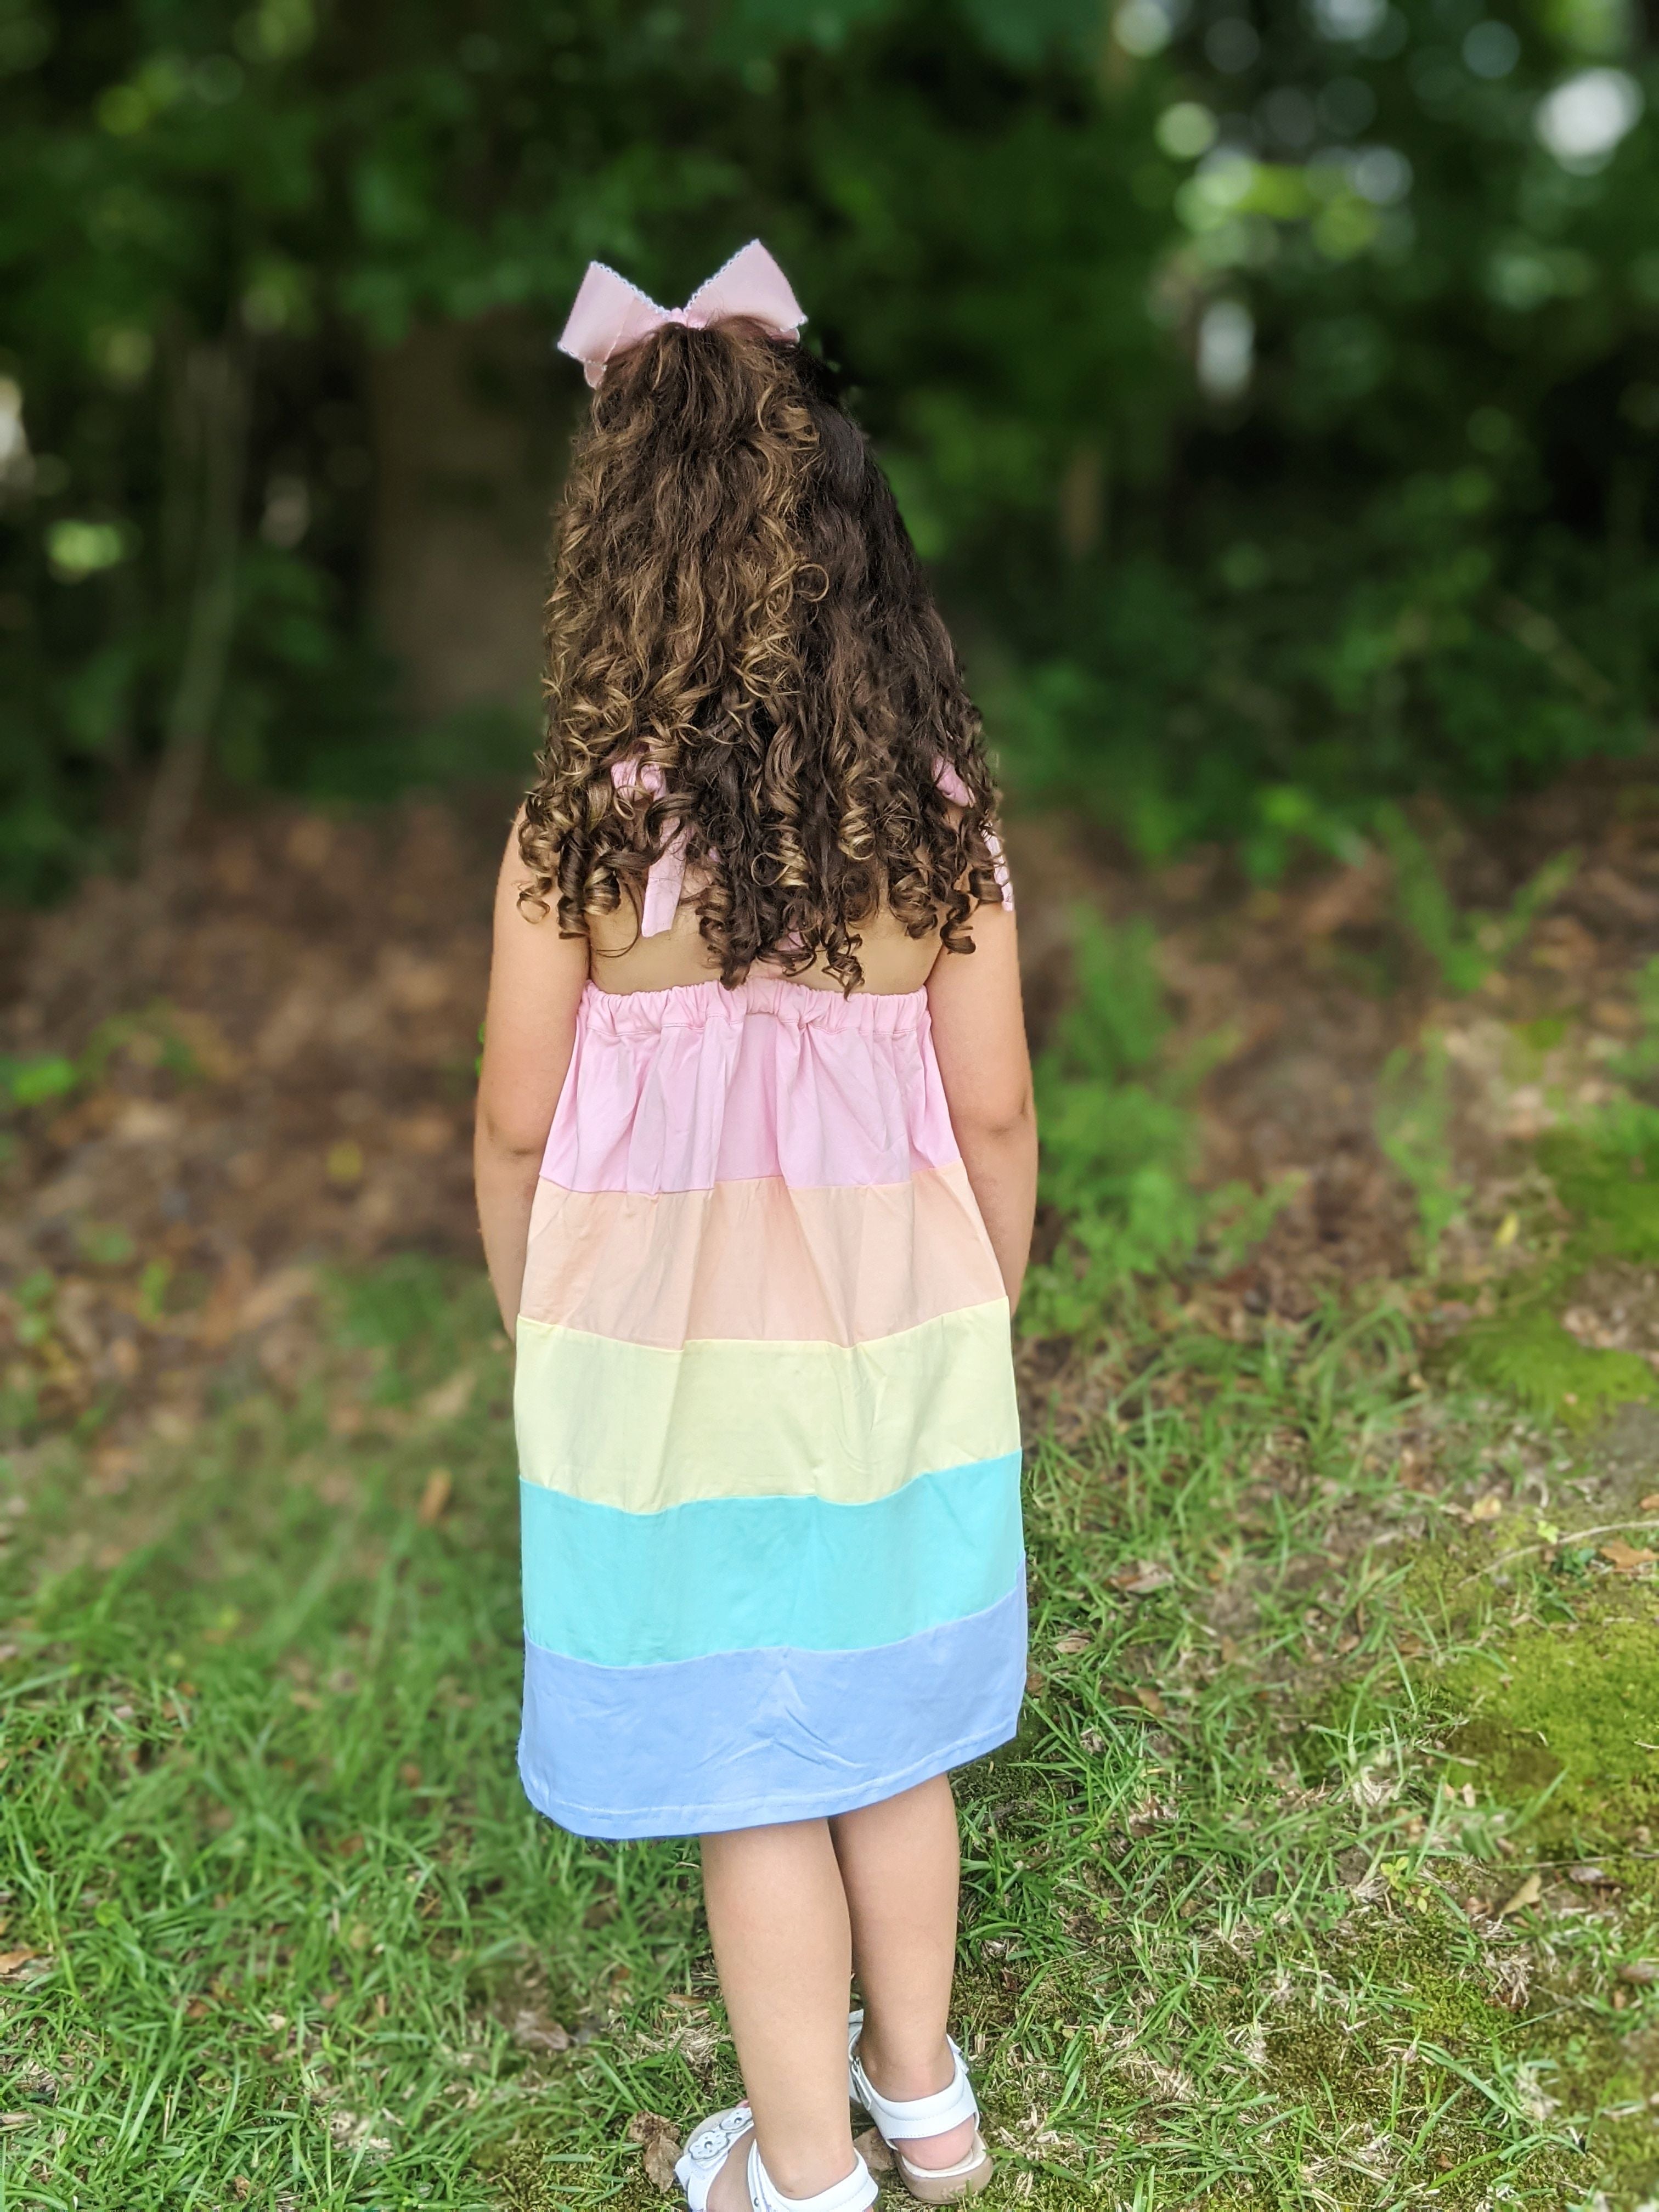 Pastel Rainbow Dress